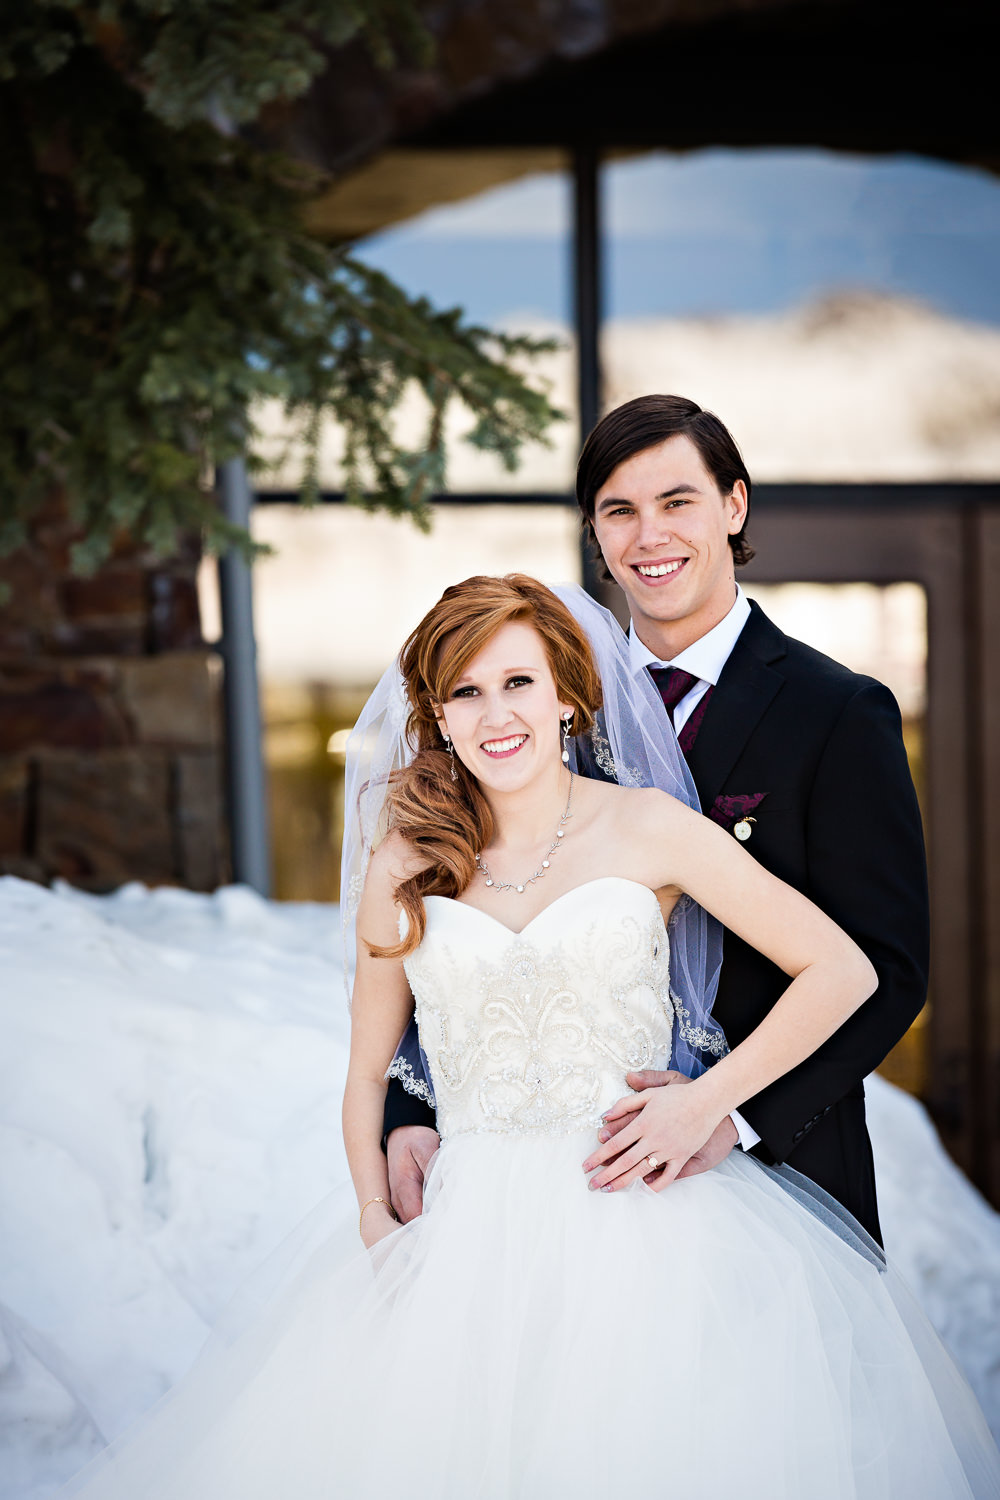 big-sky-montana-winter-wedding-breanna-first-look-bride-groom-traditional-pose.jpg